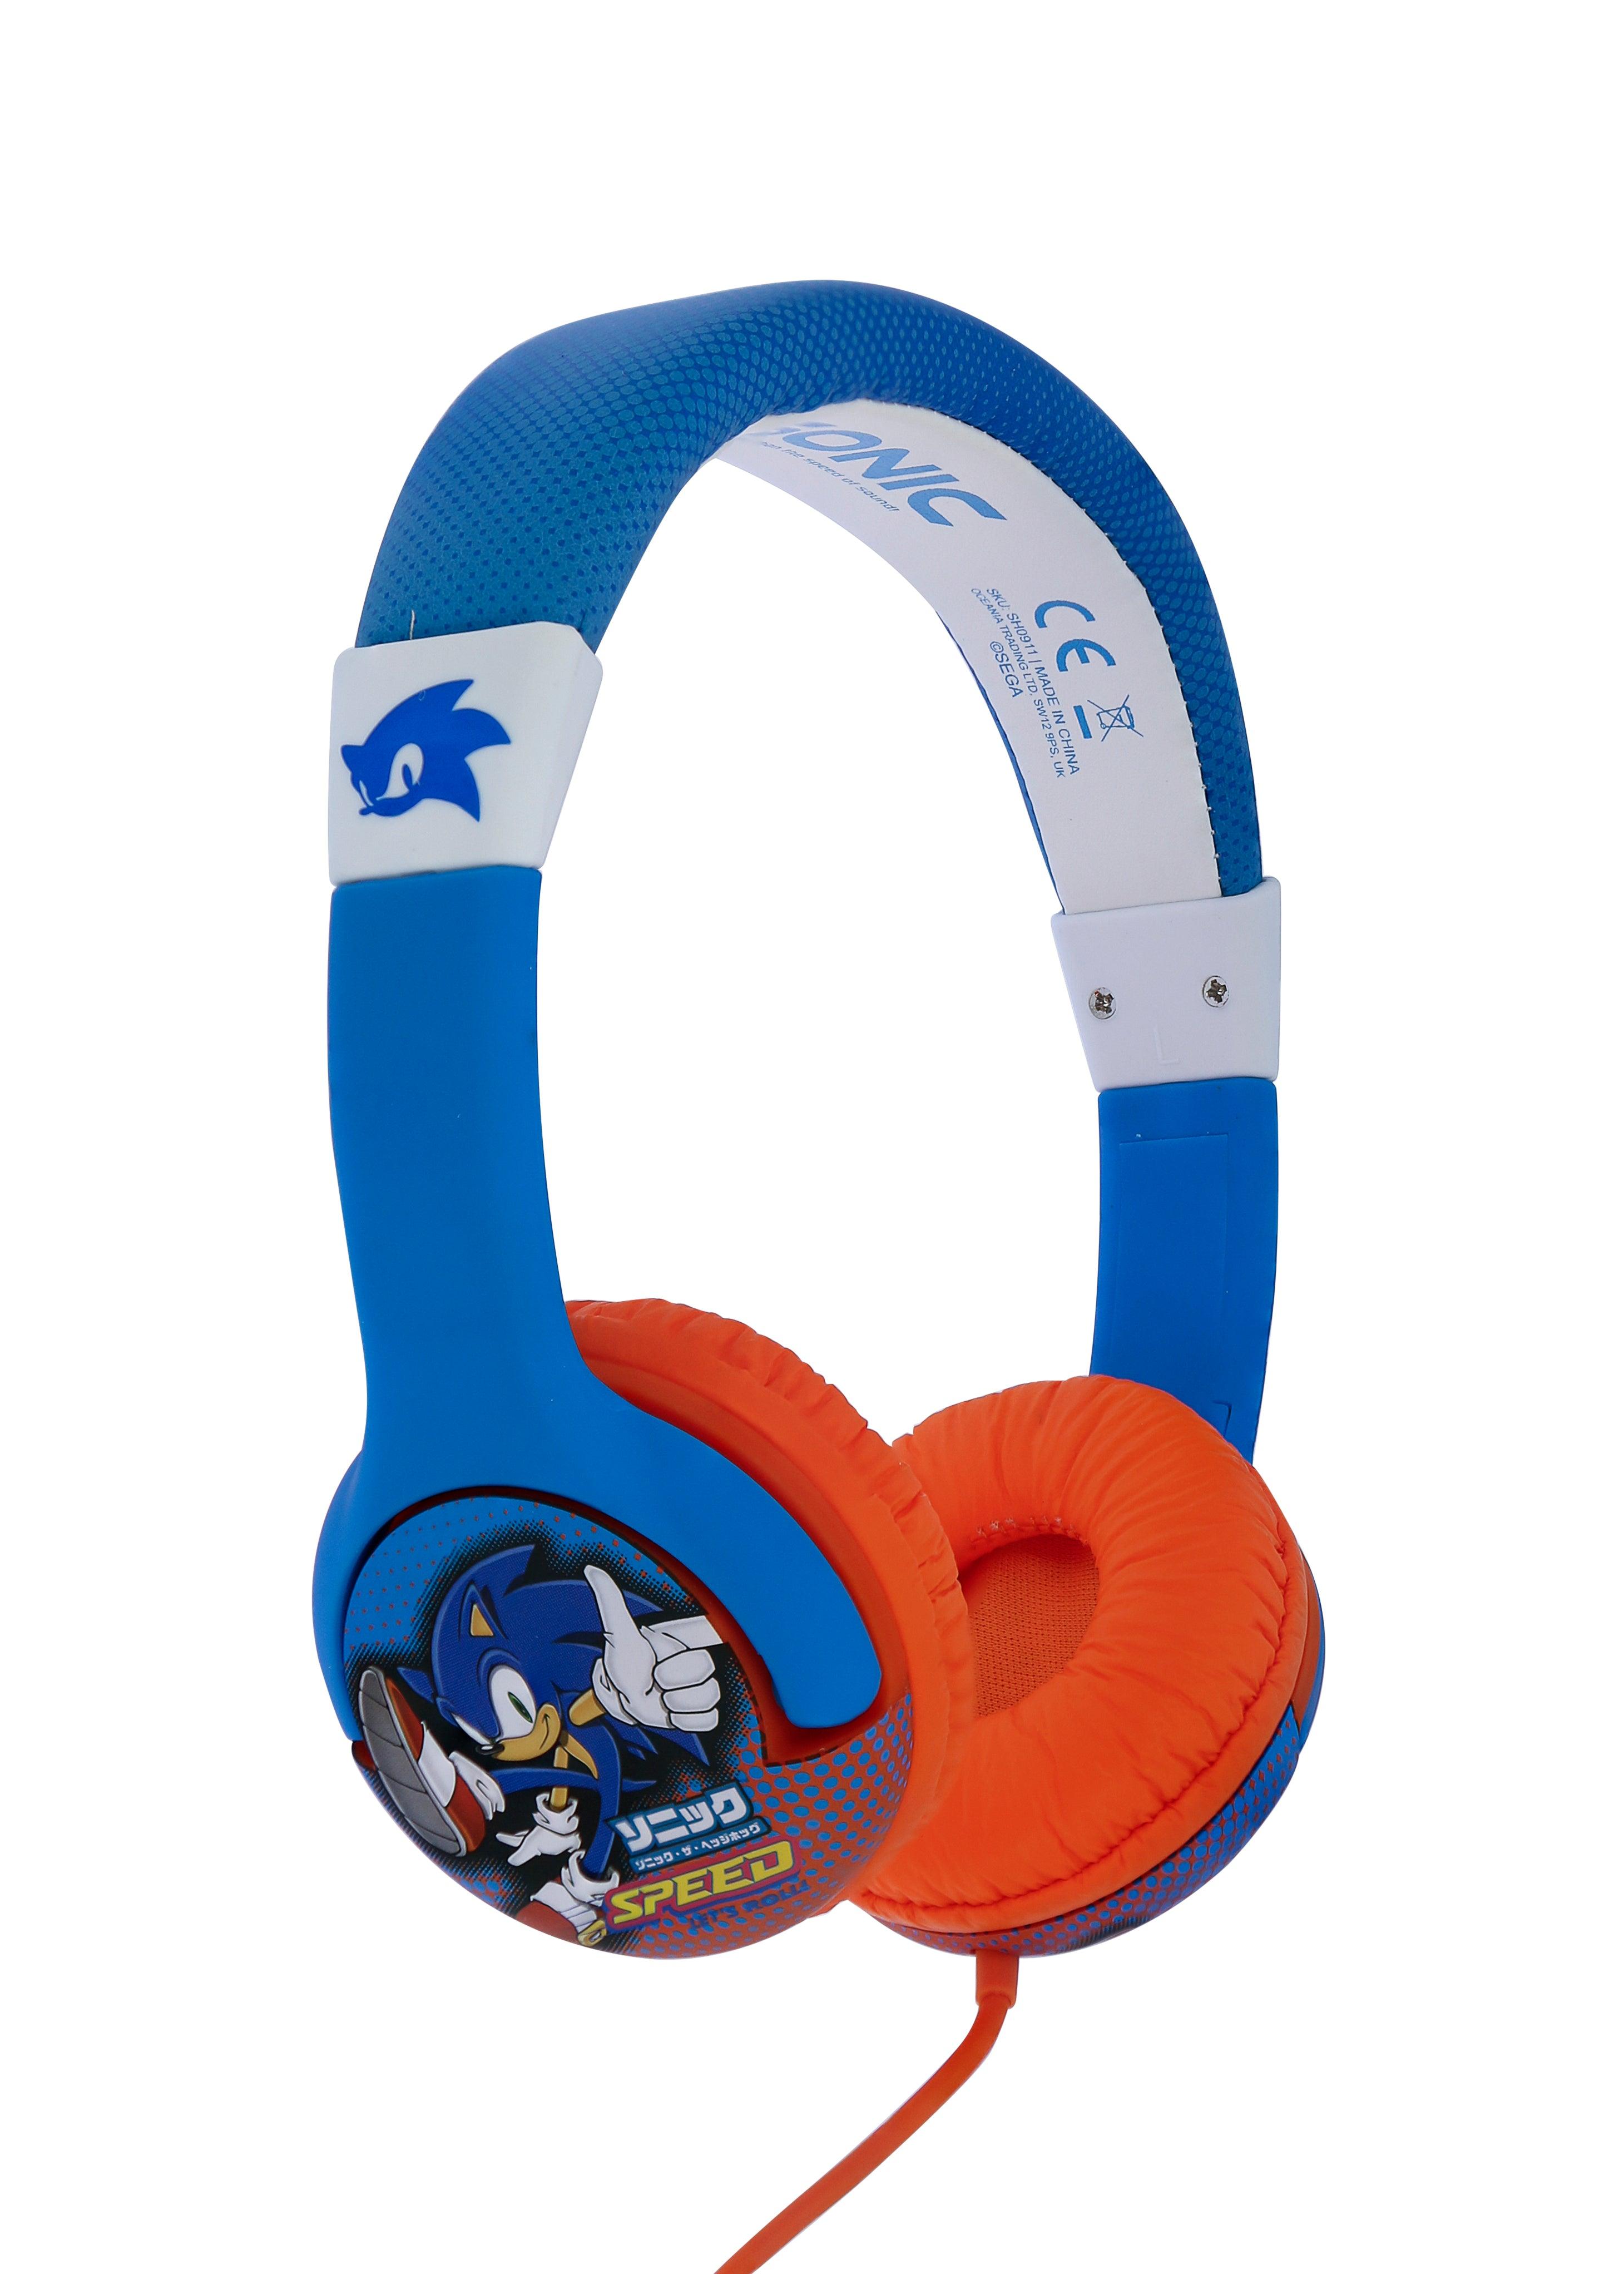 SEGA Sonic The Hedgehog Kids Headphones - childrensheadphones.co.uk